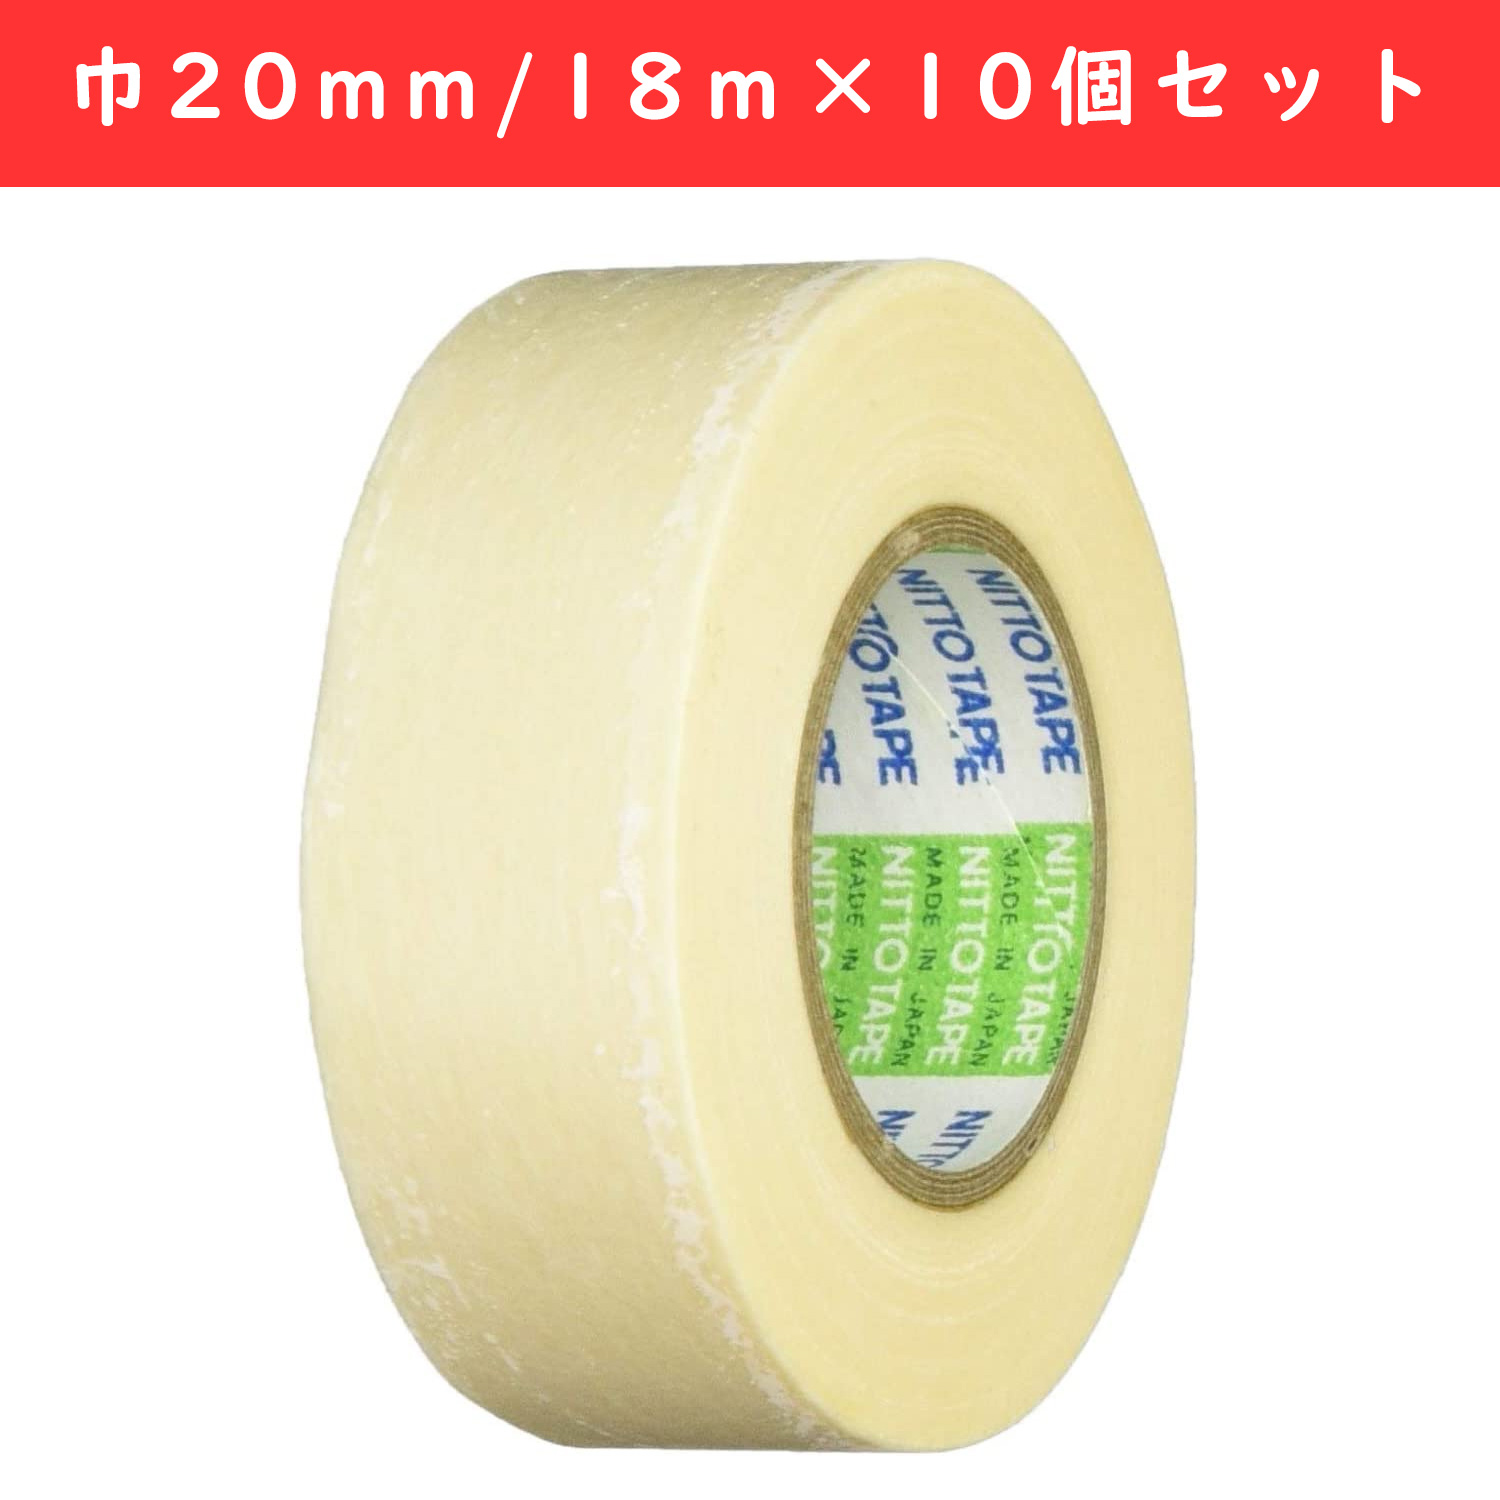 NS150-10 Masking Tape Width 20mm/18m x 10 pieces (set)